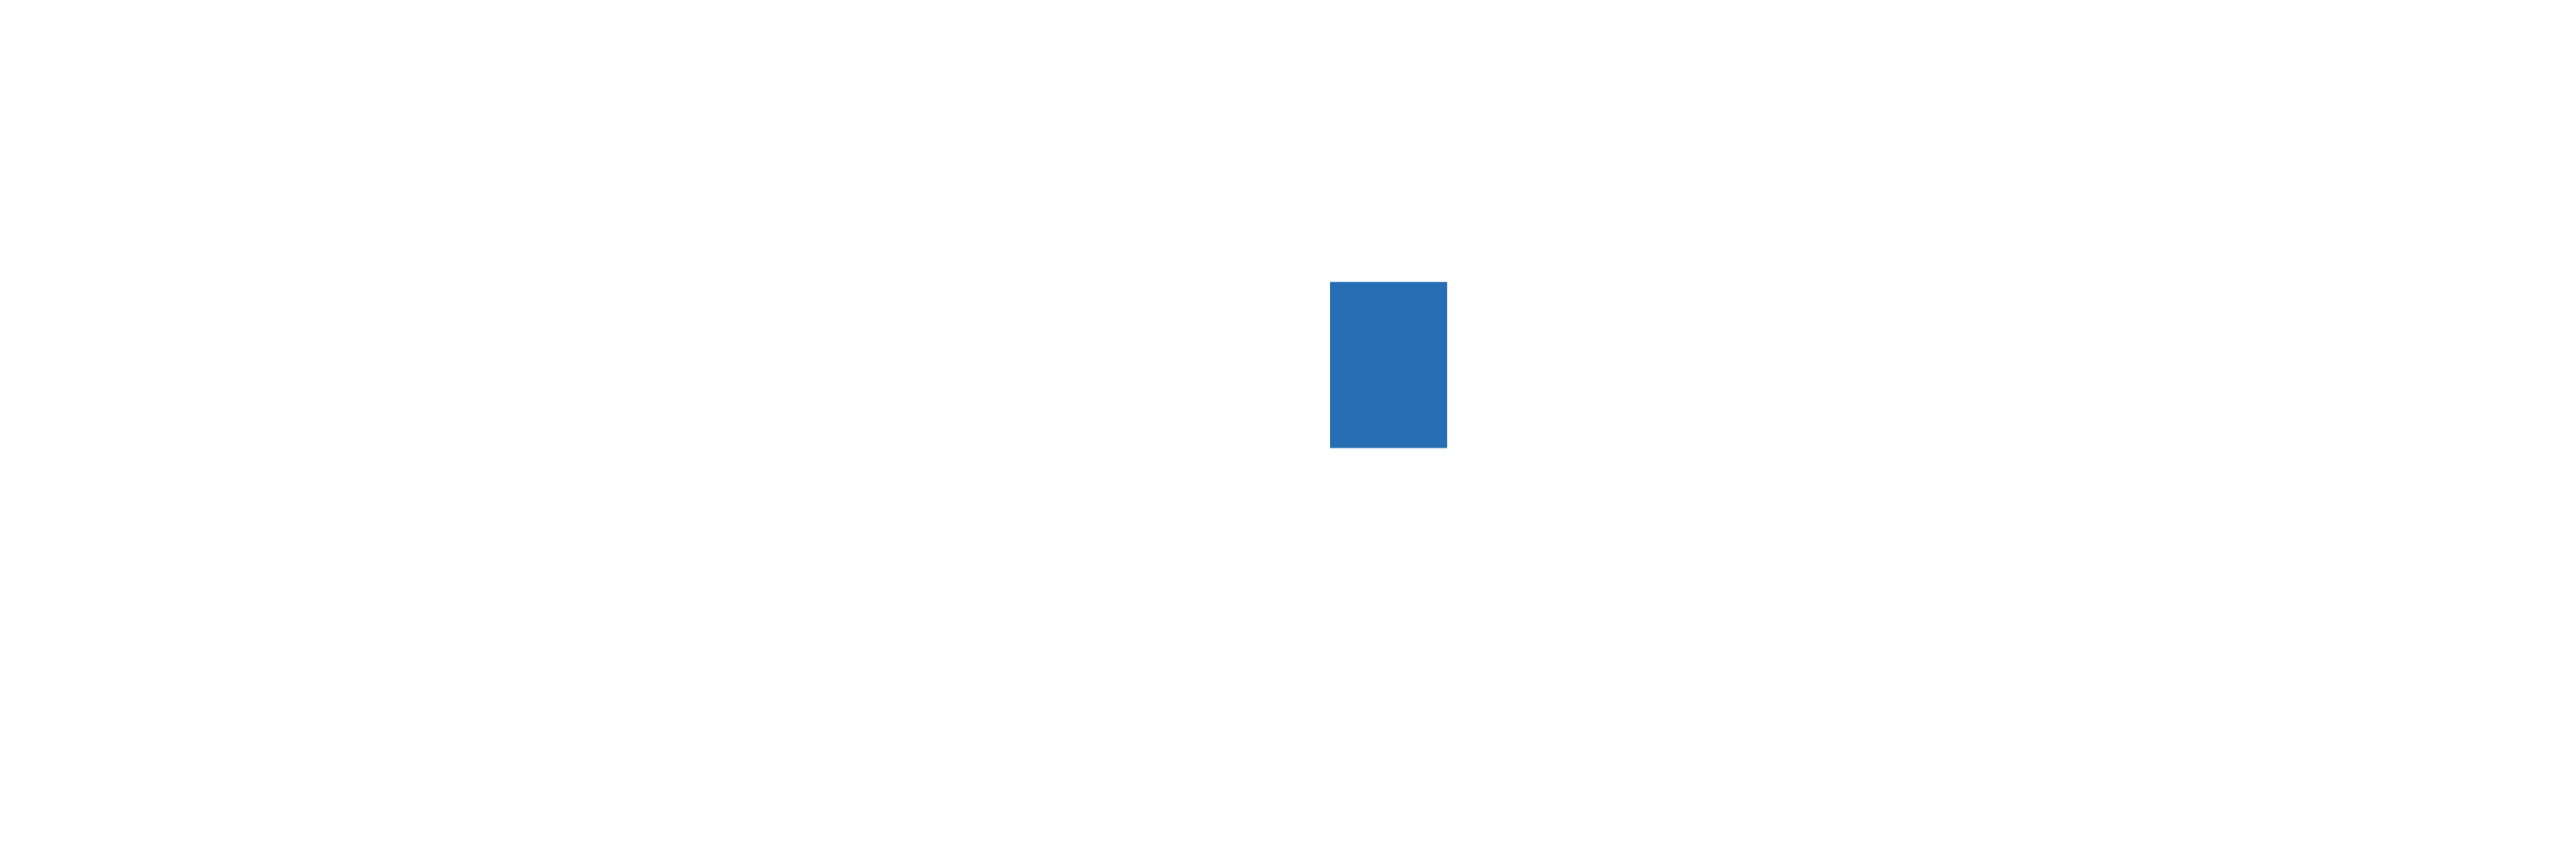 FABLINK logo_blue background version_transparent_without tagline_rgb